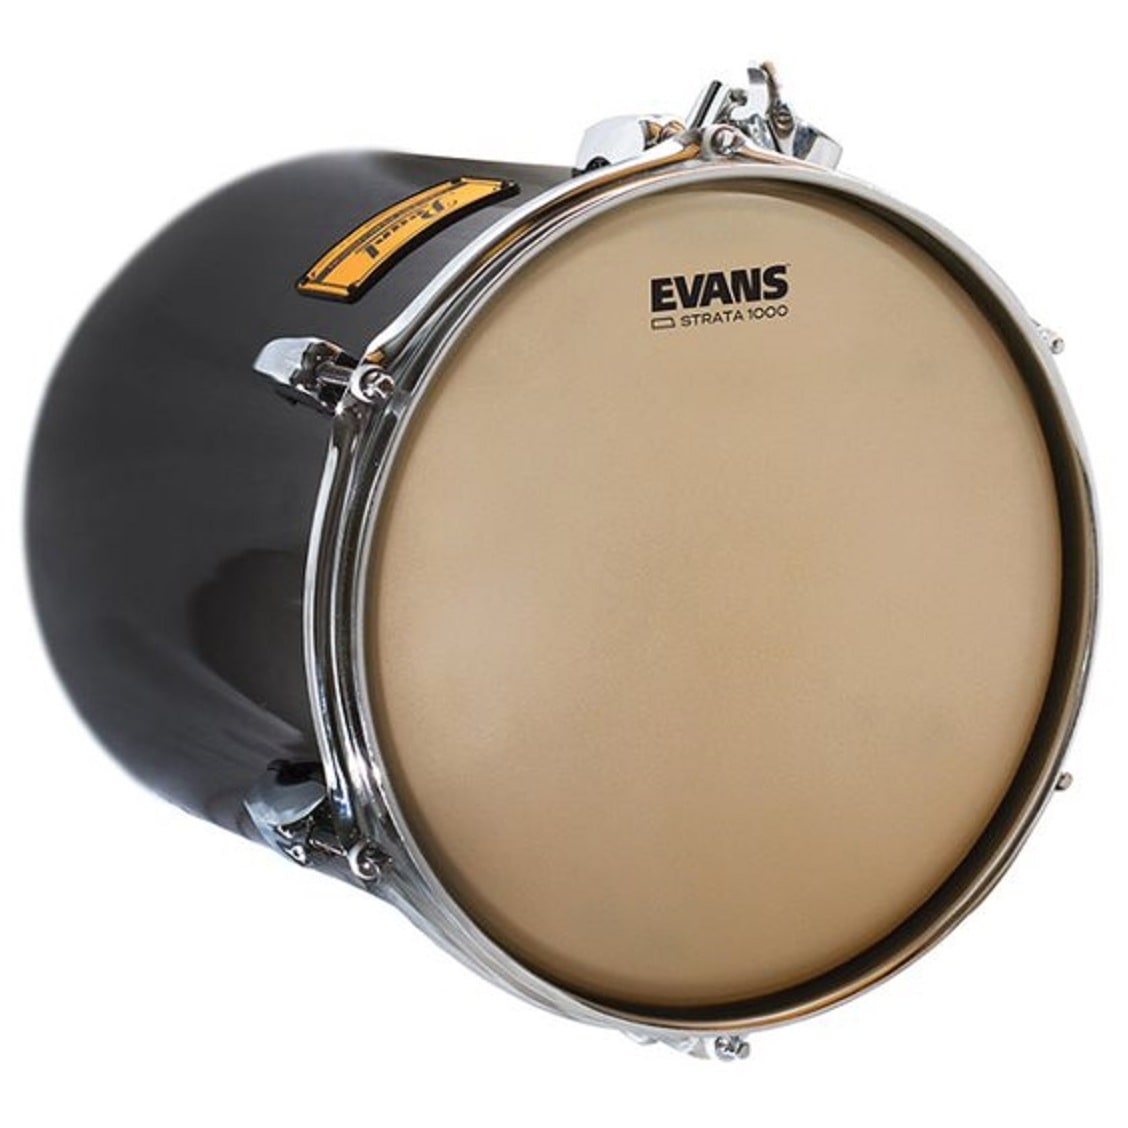 Evans CT10S - Strata 1000 Concert Drum Head, 10 Zoll 1